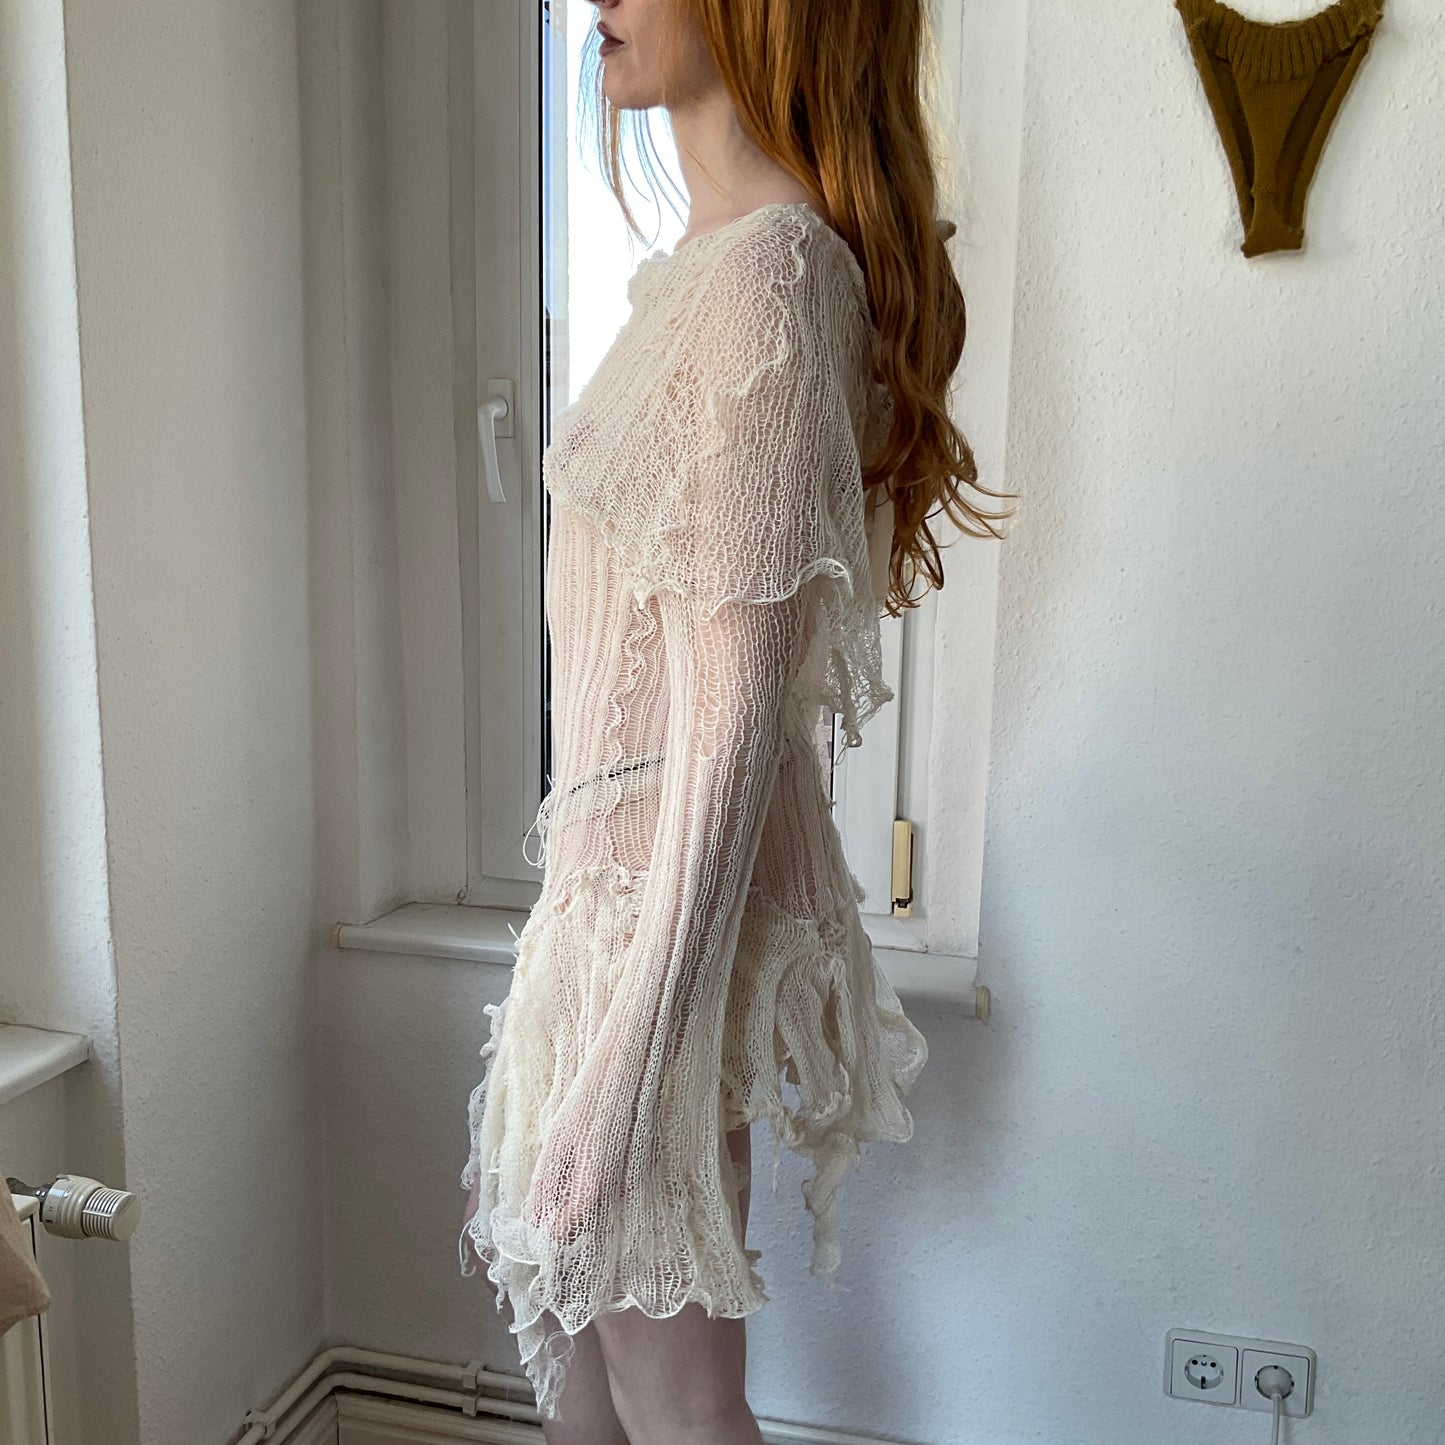 gargarox ~ Fairy dress